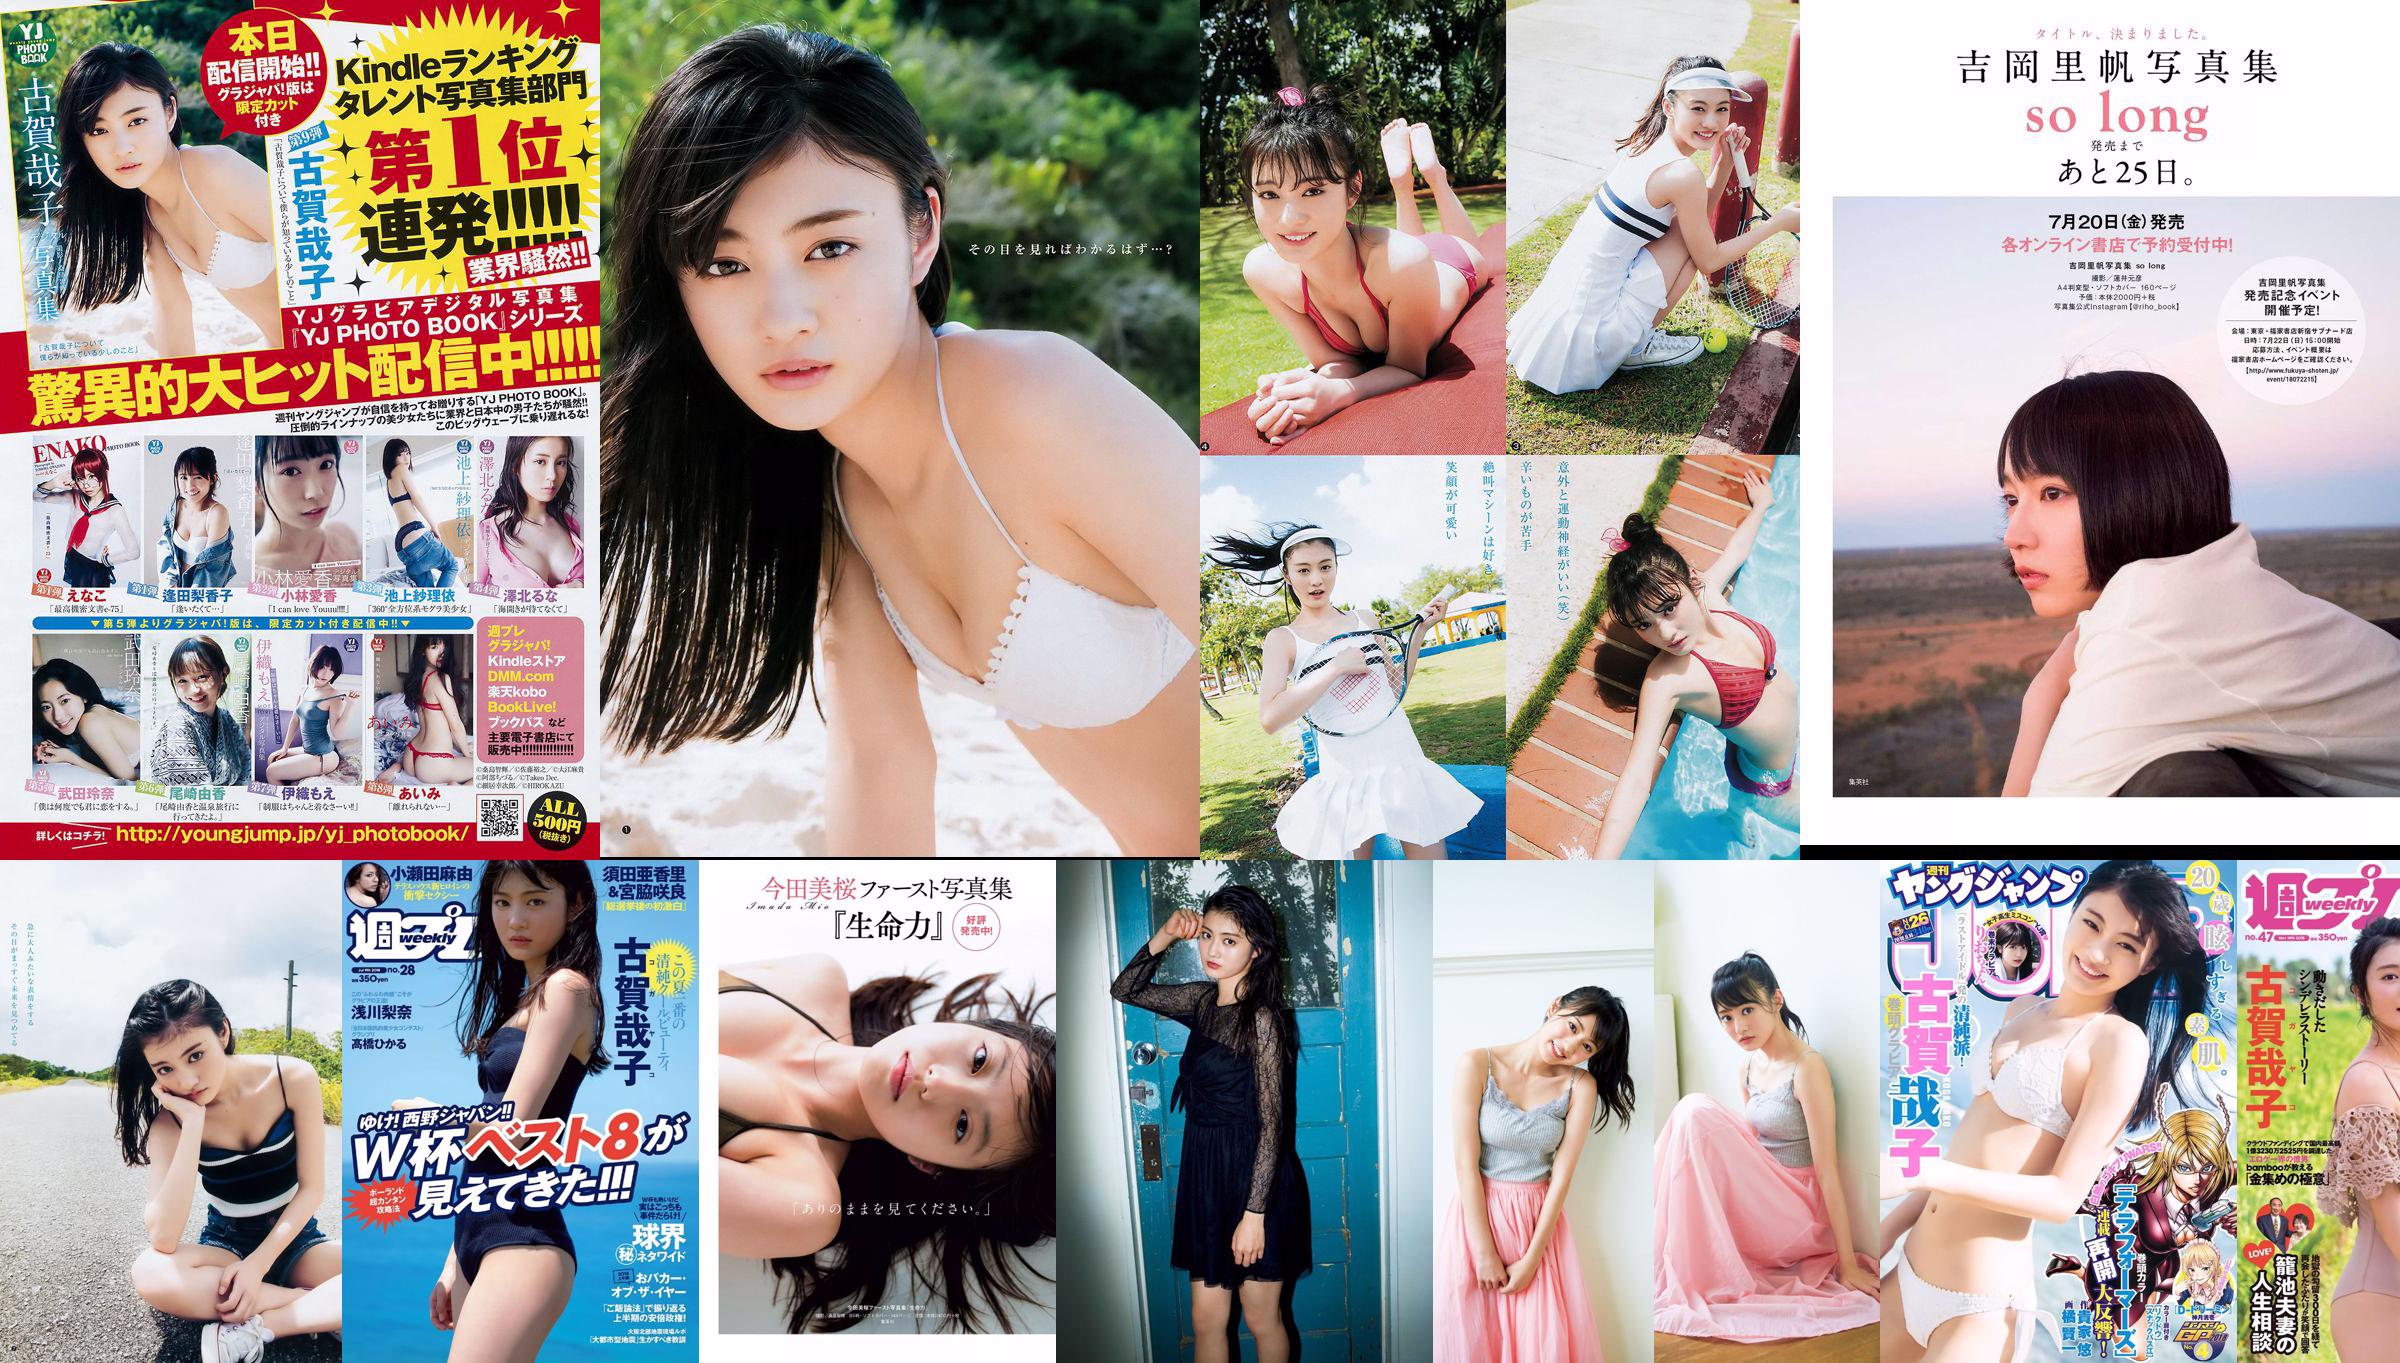 Йошико Кога Риочон [Weekly Young Jump] № 26 фото журнала в 2018 году No.9b3218 Страница 2